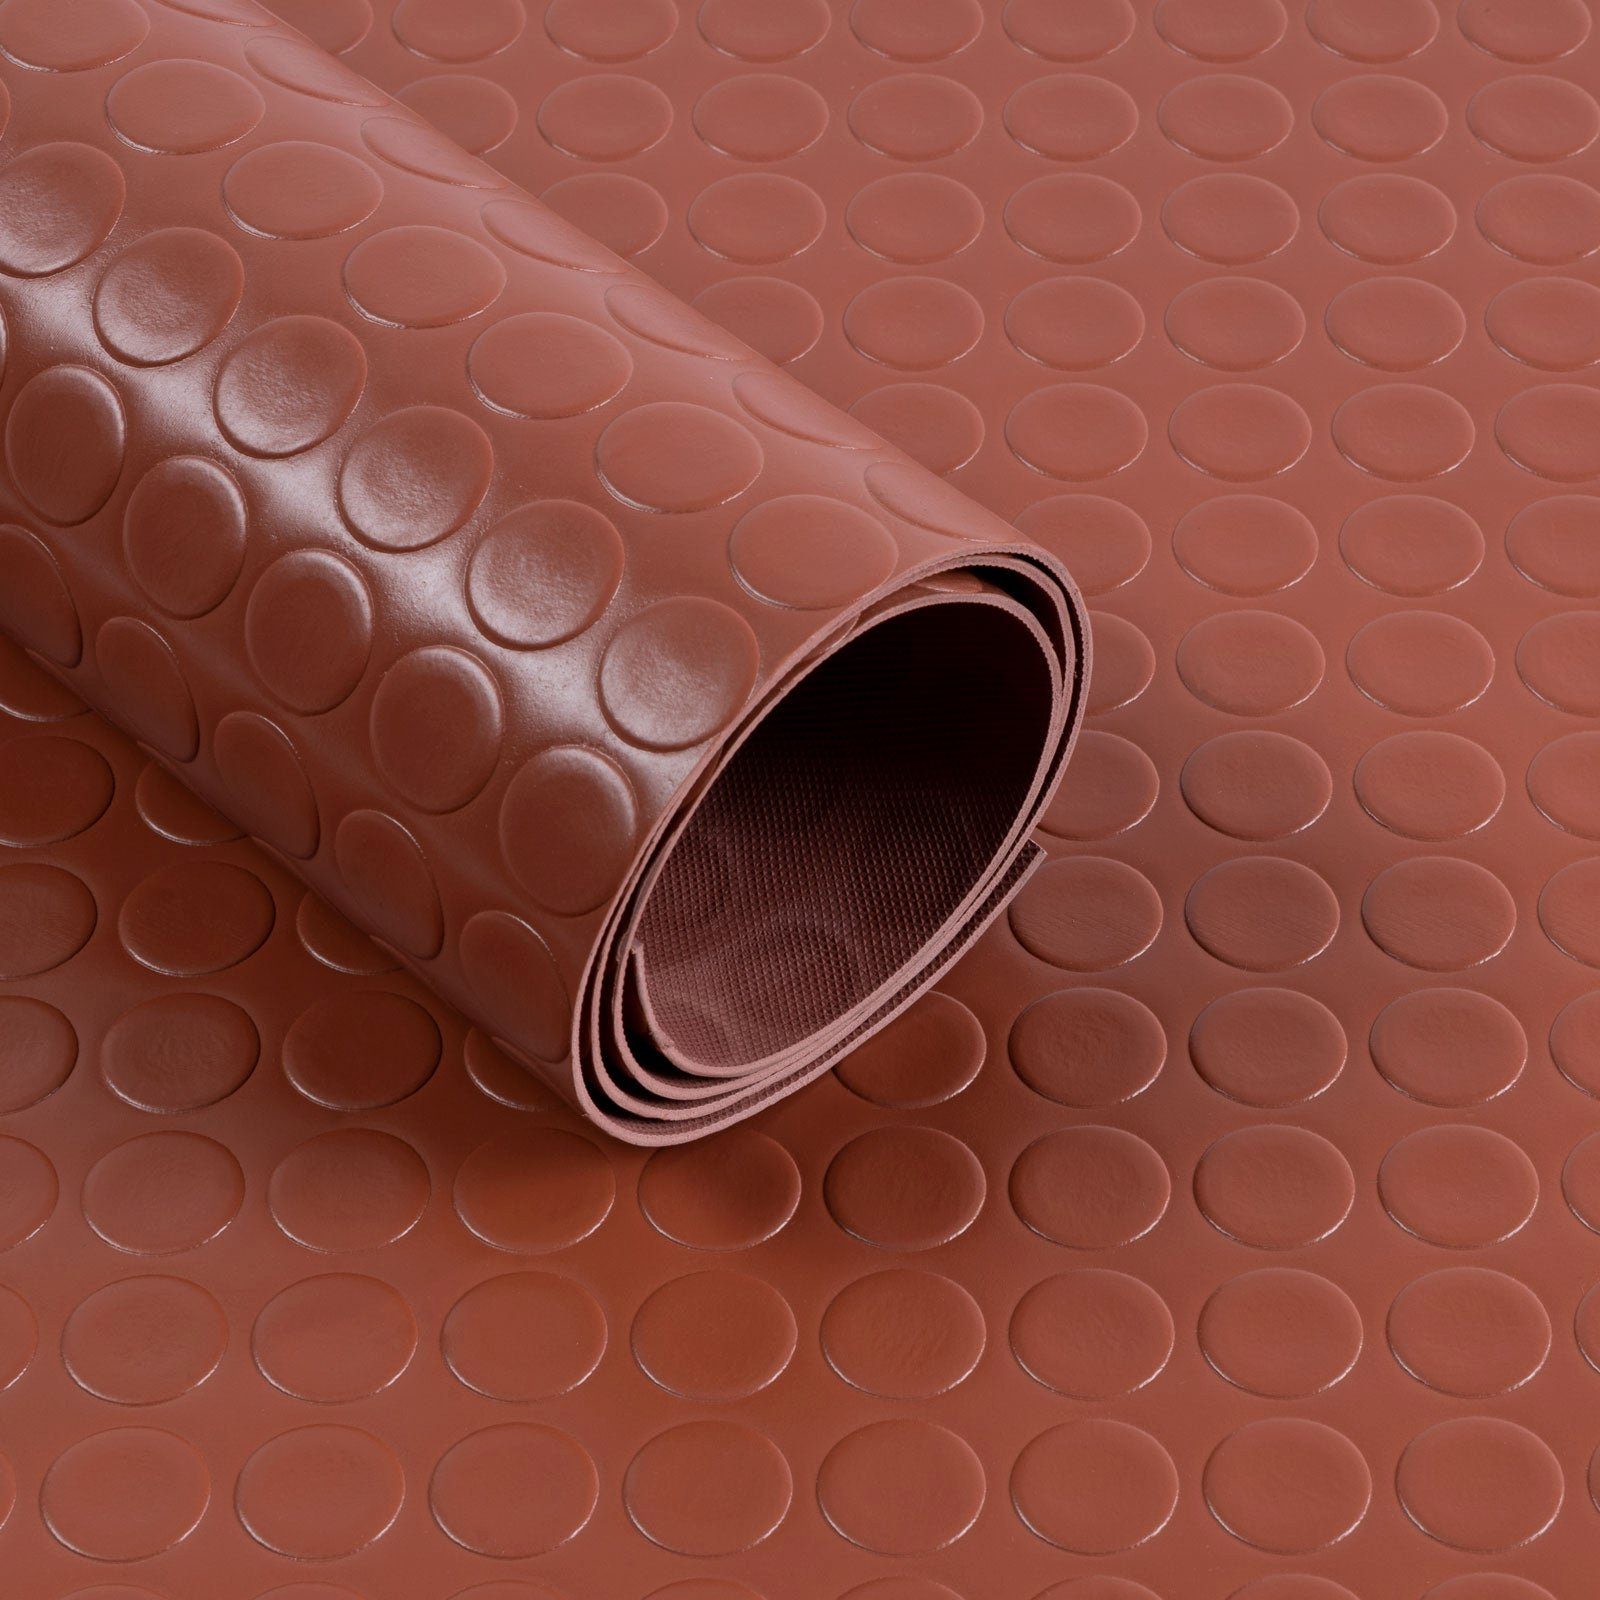 Bodenschutzmatte Noppen, Terracotta Farben Stärke viele 2mm, Kubus PVC-Bodenbelag, Große